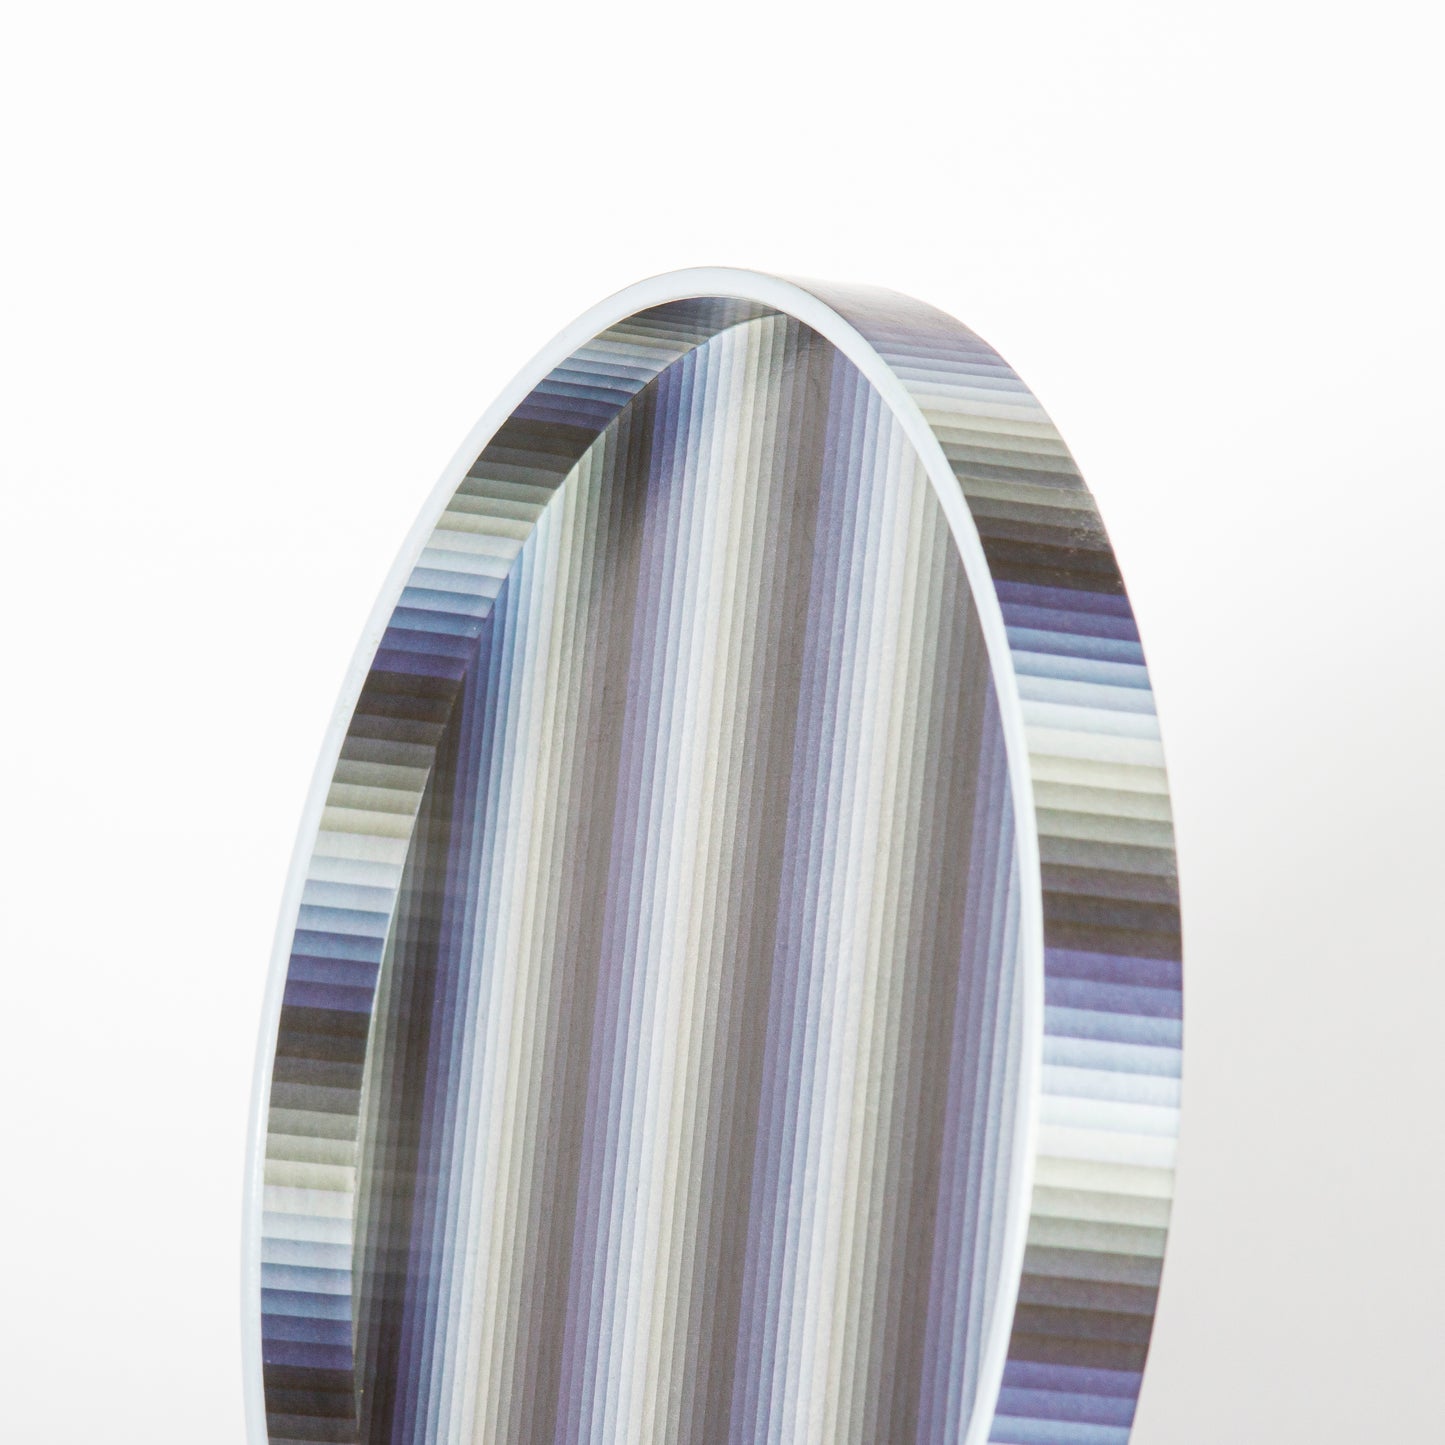 Large Undulating Stripe Tray - Blue